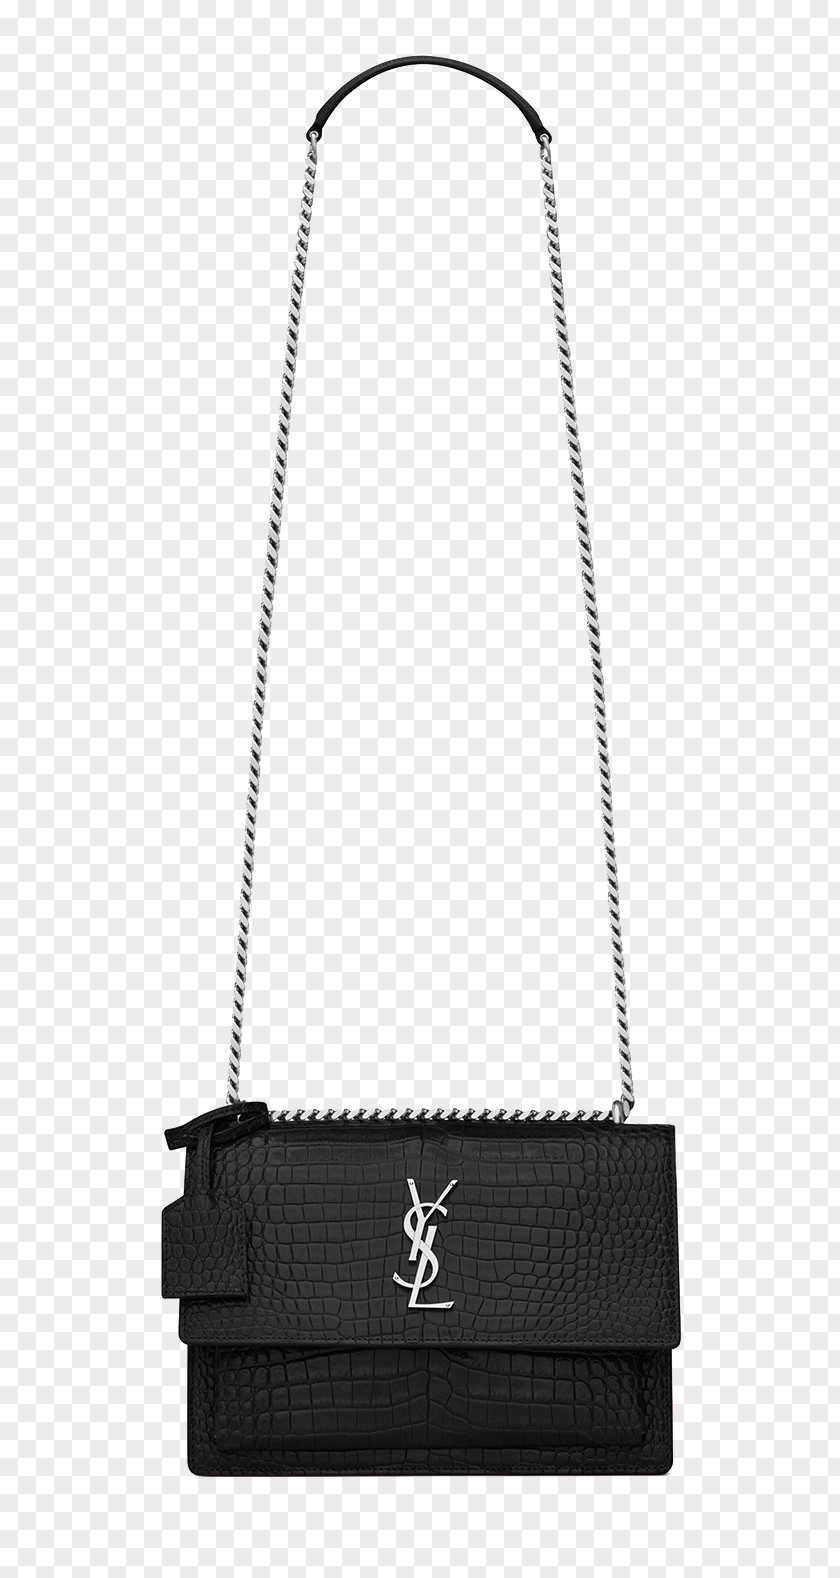 SaintLaurent Chain Bag Handbag Yves Saint Laurent Fashion Lipstick PNG